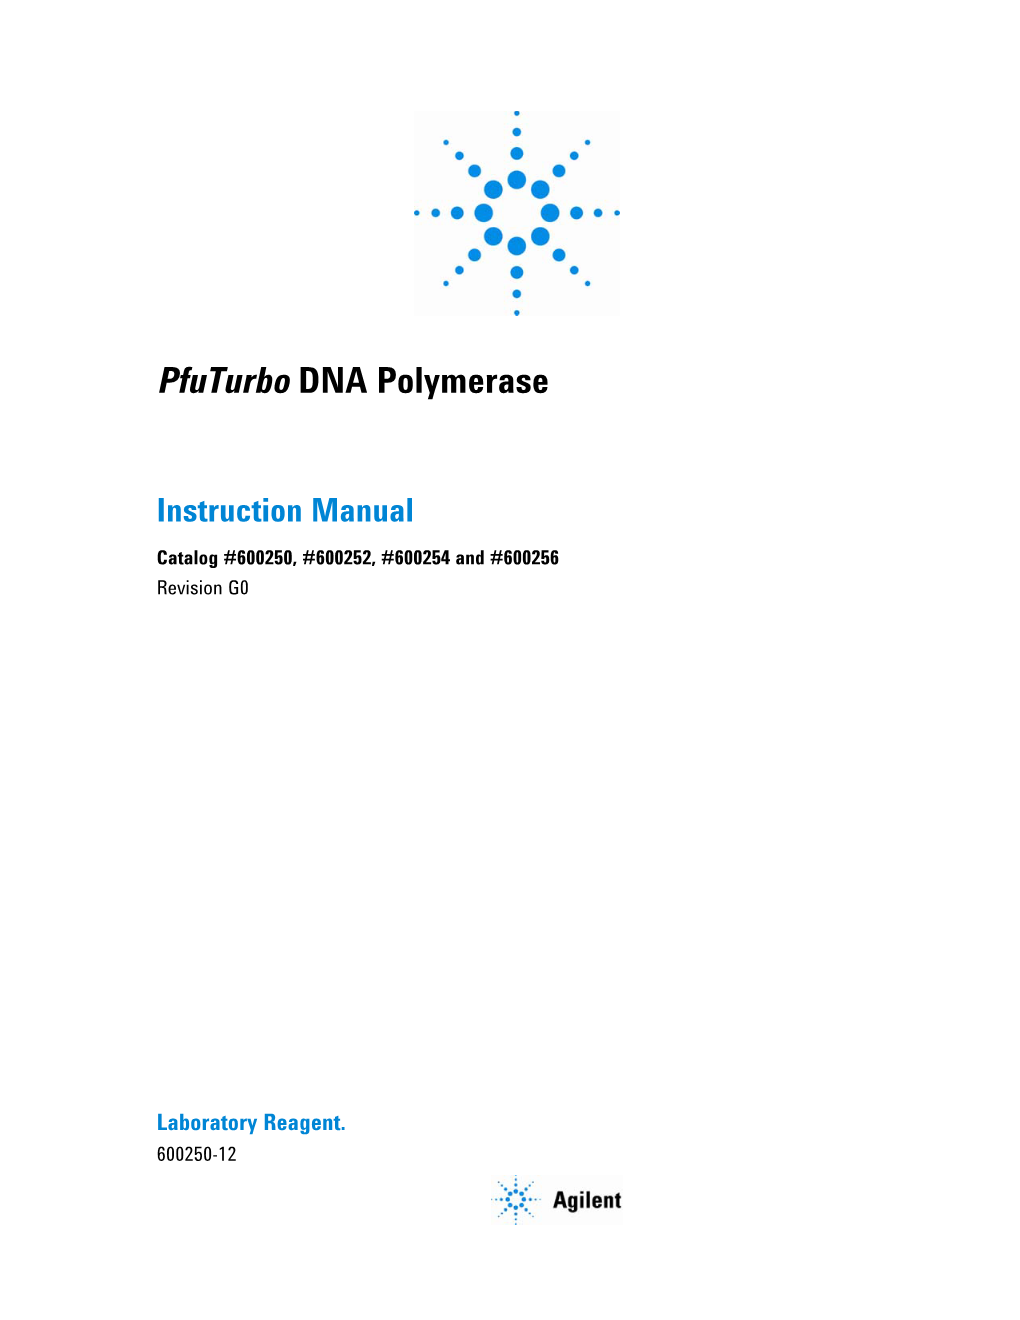 Pfuturbo DNA Polymerase Instruction Manual